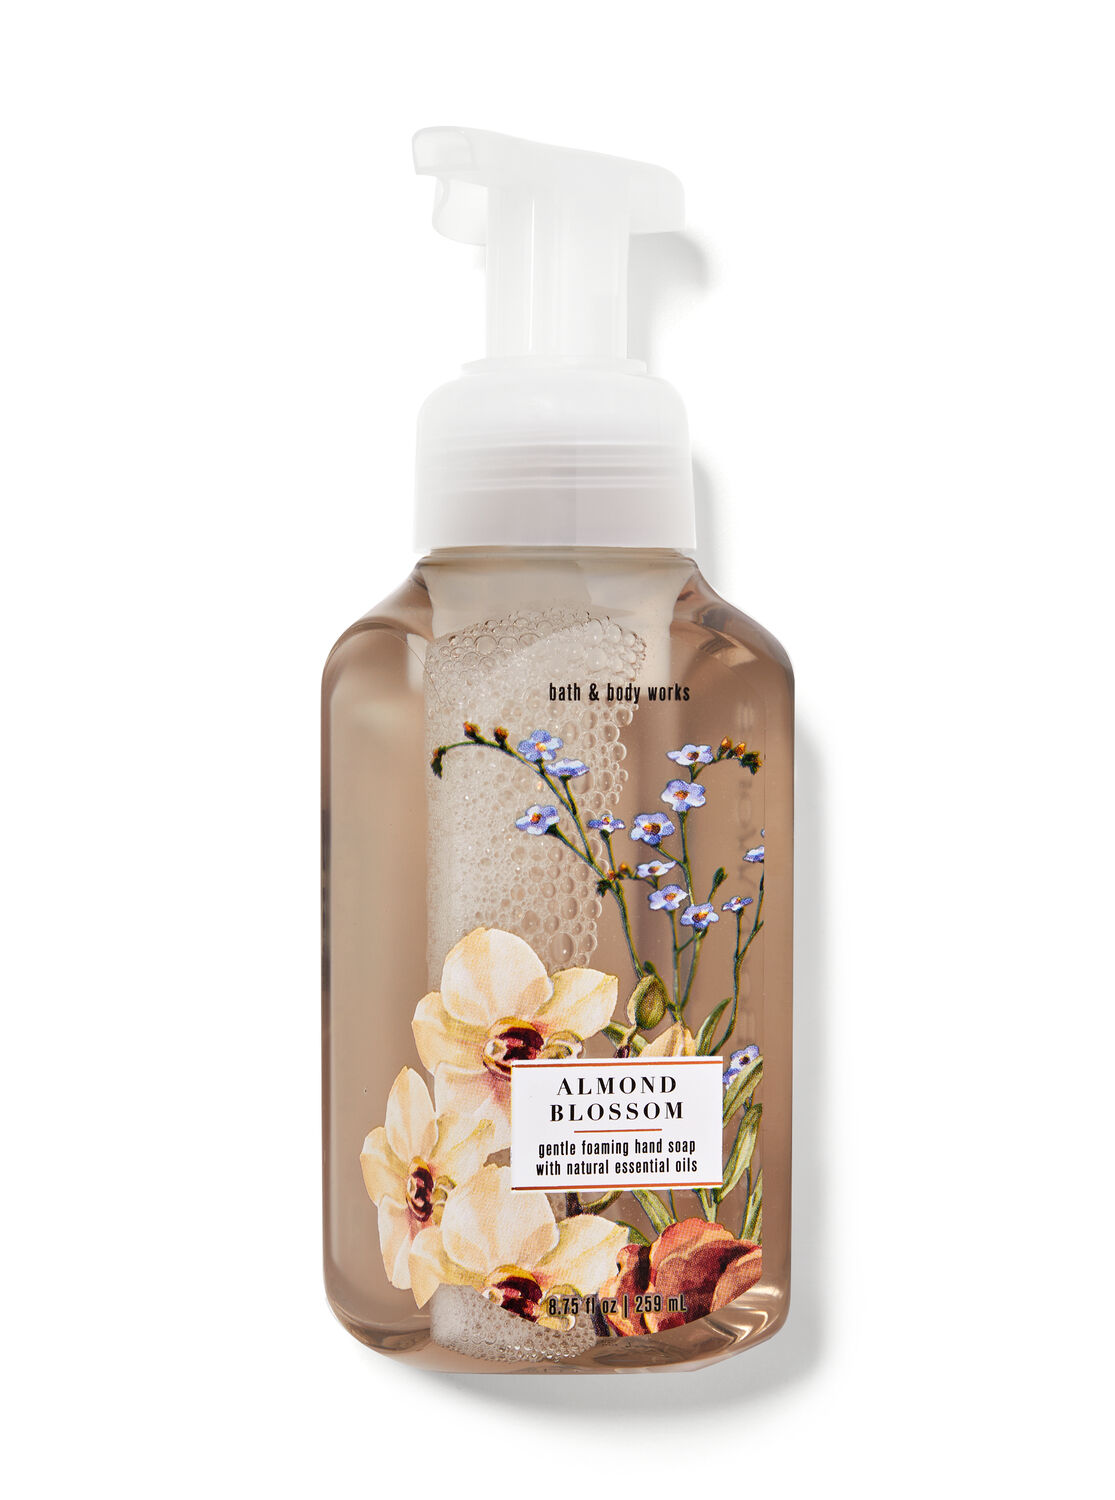 Almond Blossom Gentle Foaming Hand Soap